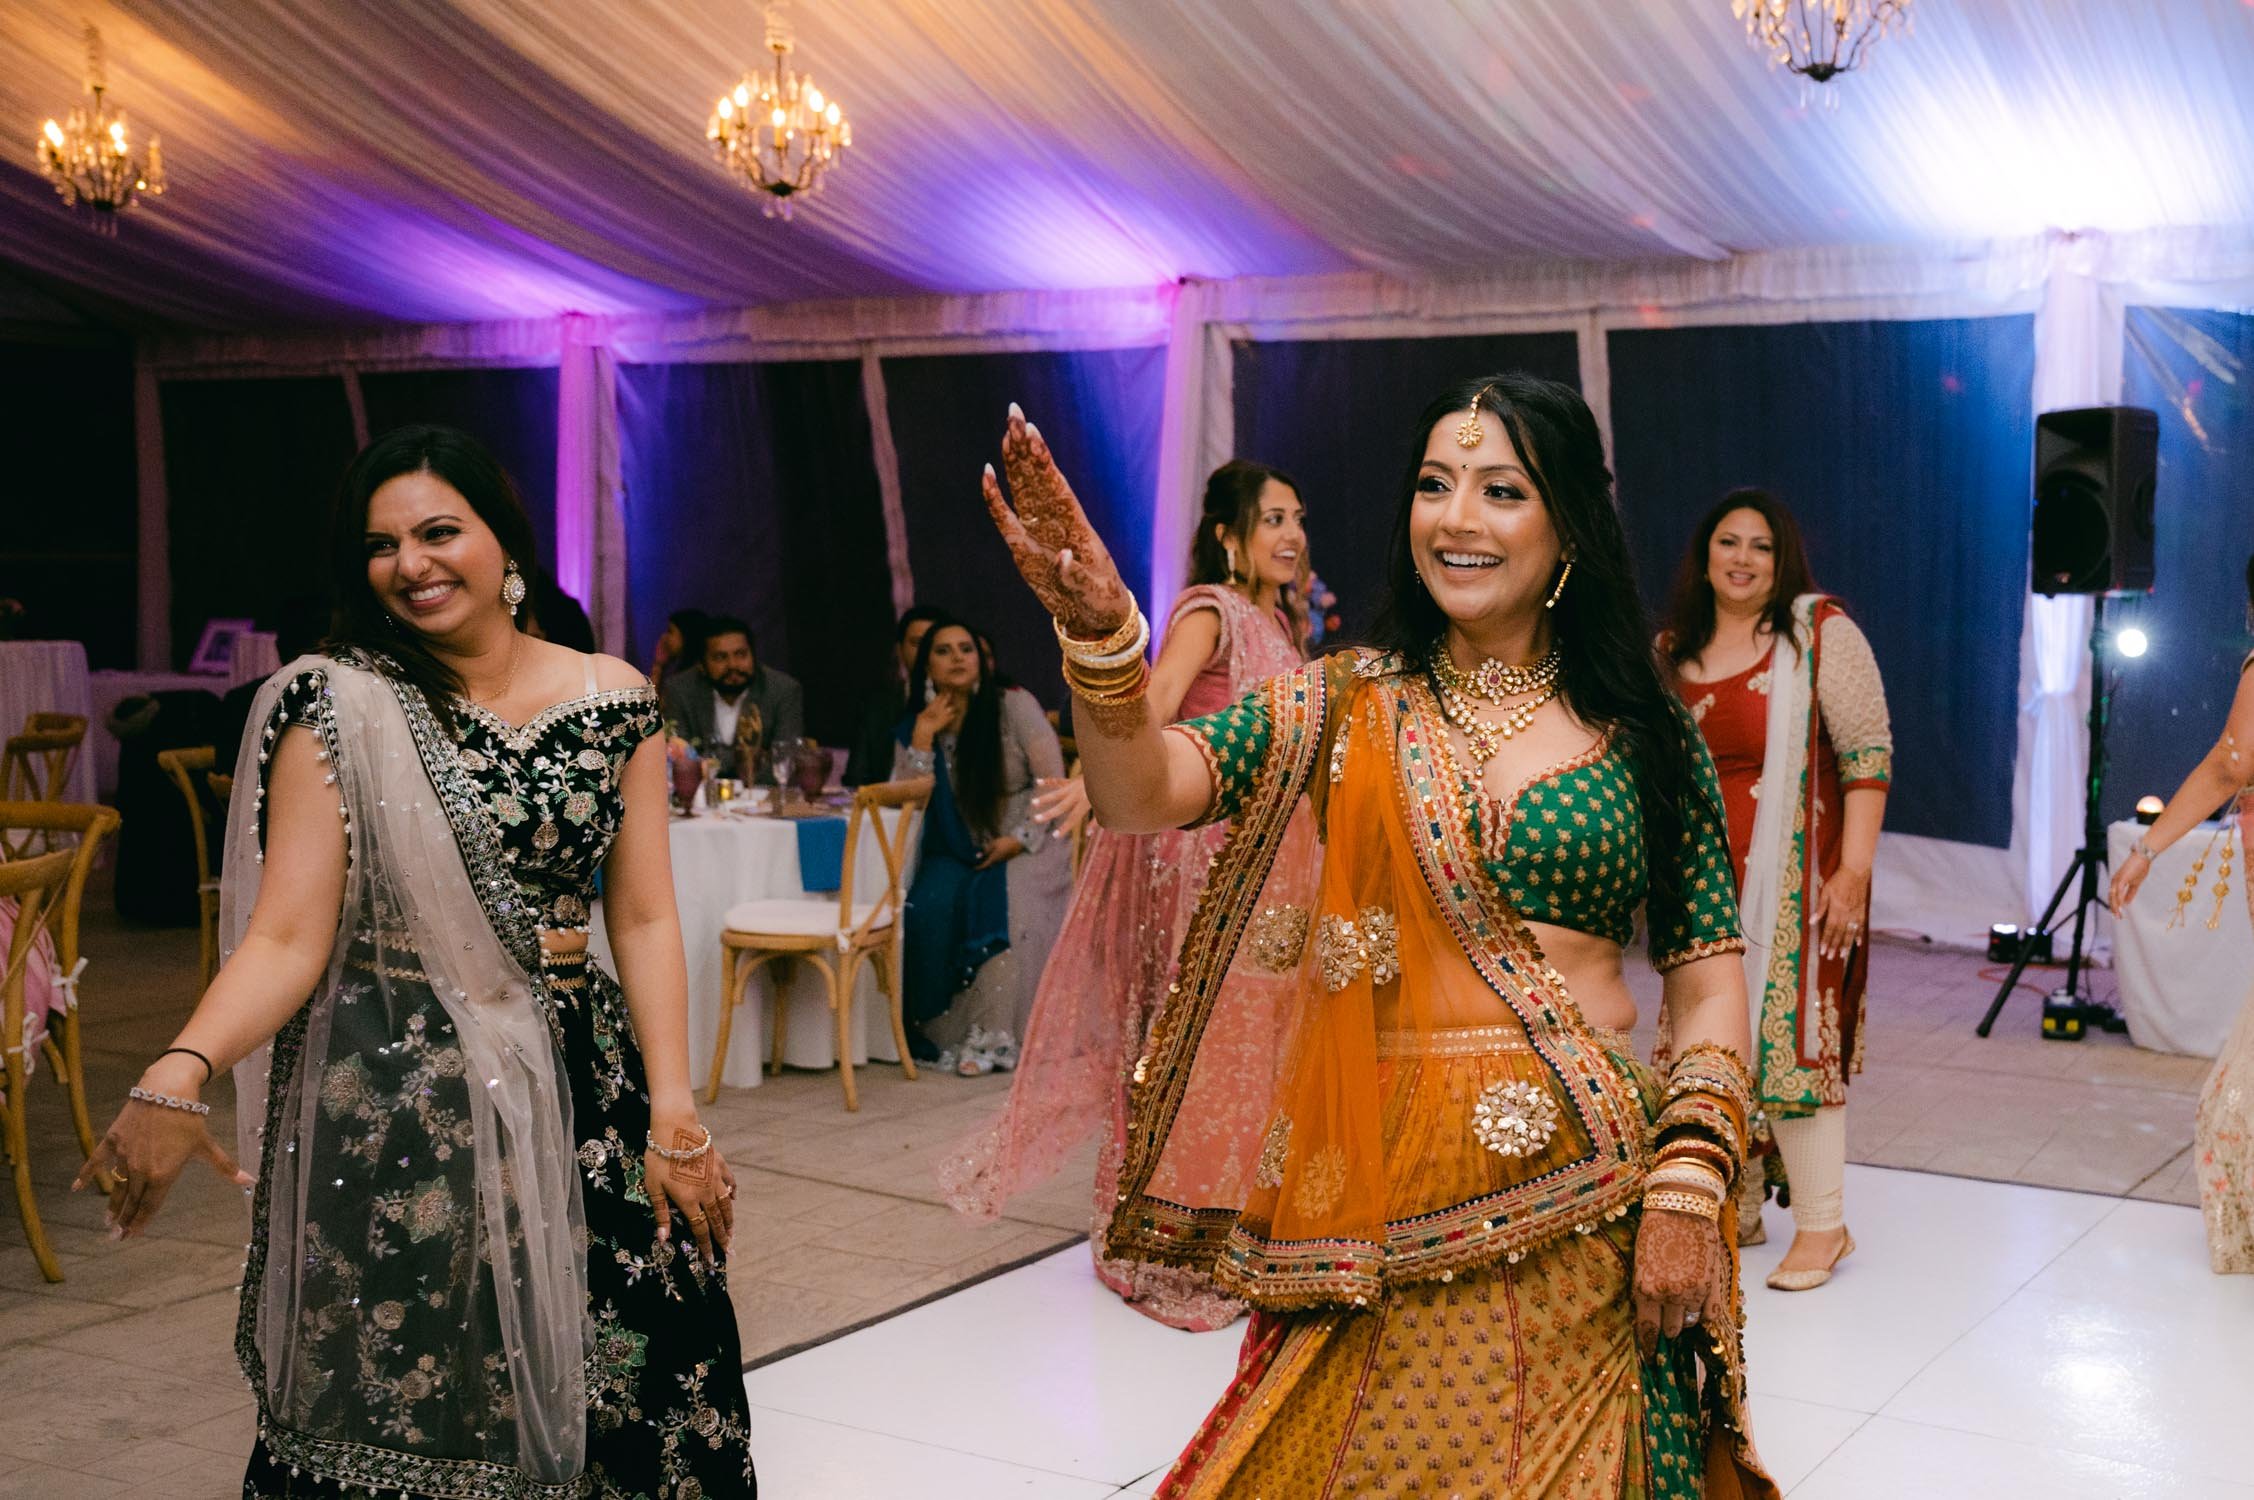 Indian wedding reception, photo of bride and bridesmaids dancing